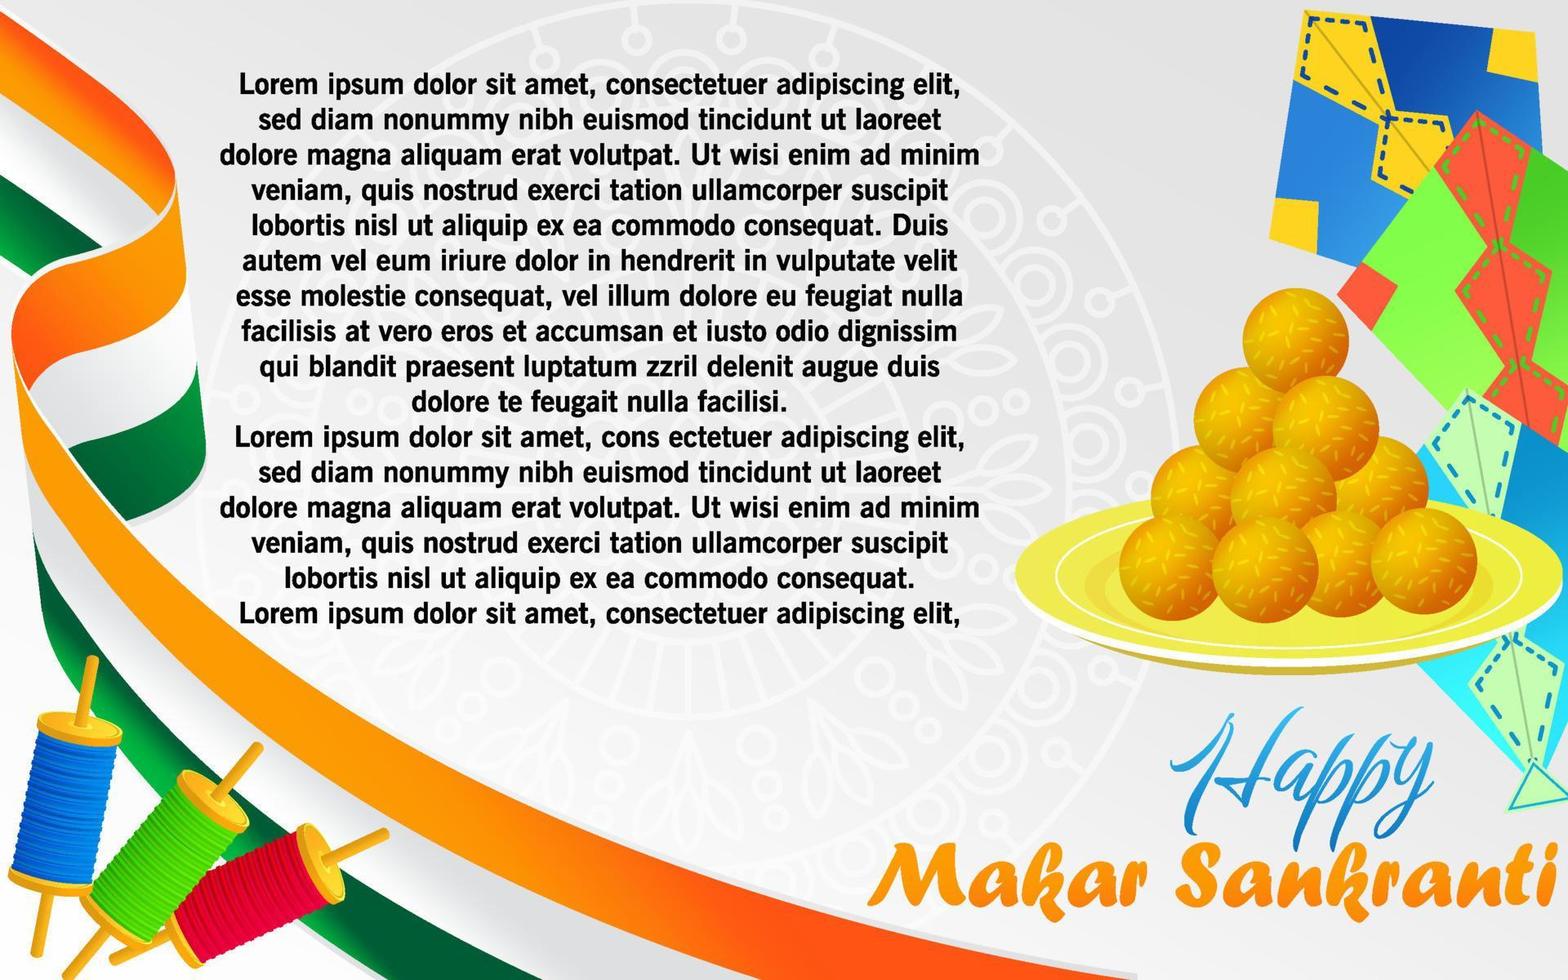 Happy Makar Sankranti Copy Text Space Banner Flyer Vector Illustration